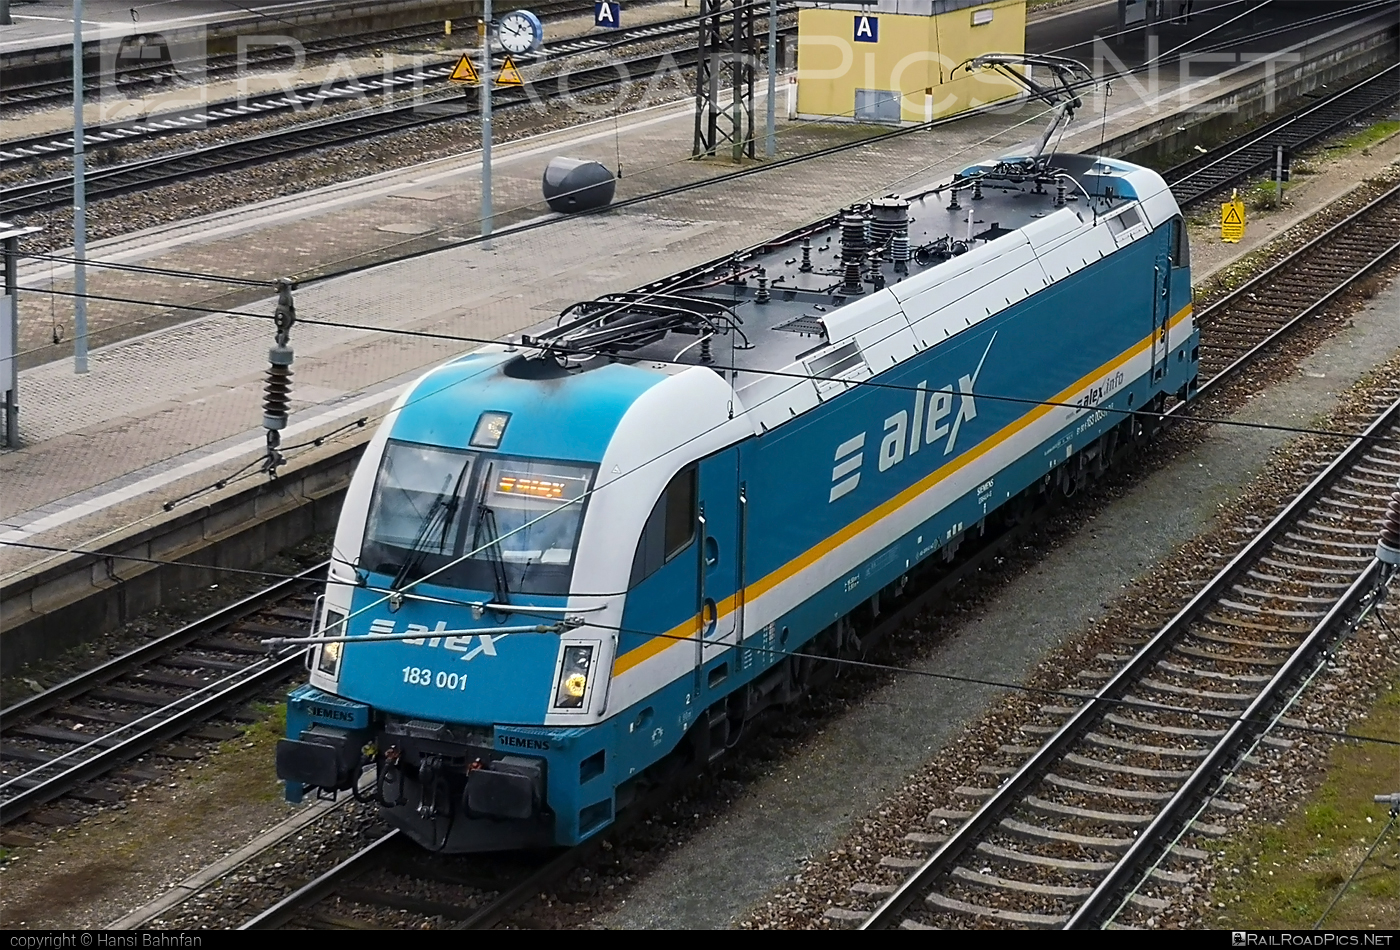 Siemens ES 64 U4 - 183 001 operated by Die Länderbahn GmbH DLB #alex #dielanderbahn #es64 #es64u4 #eurosprinter #siemens #siemensEs64 #siemensEs64u4 #siemenstaurus #taurus #tauruslocomotive #vogtlandbahn #vogtlandbahngmbh